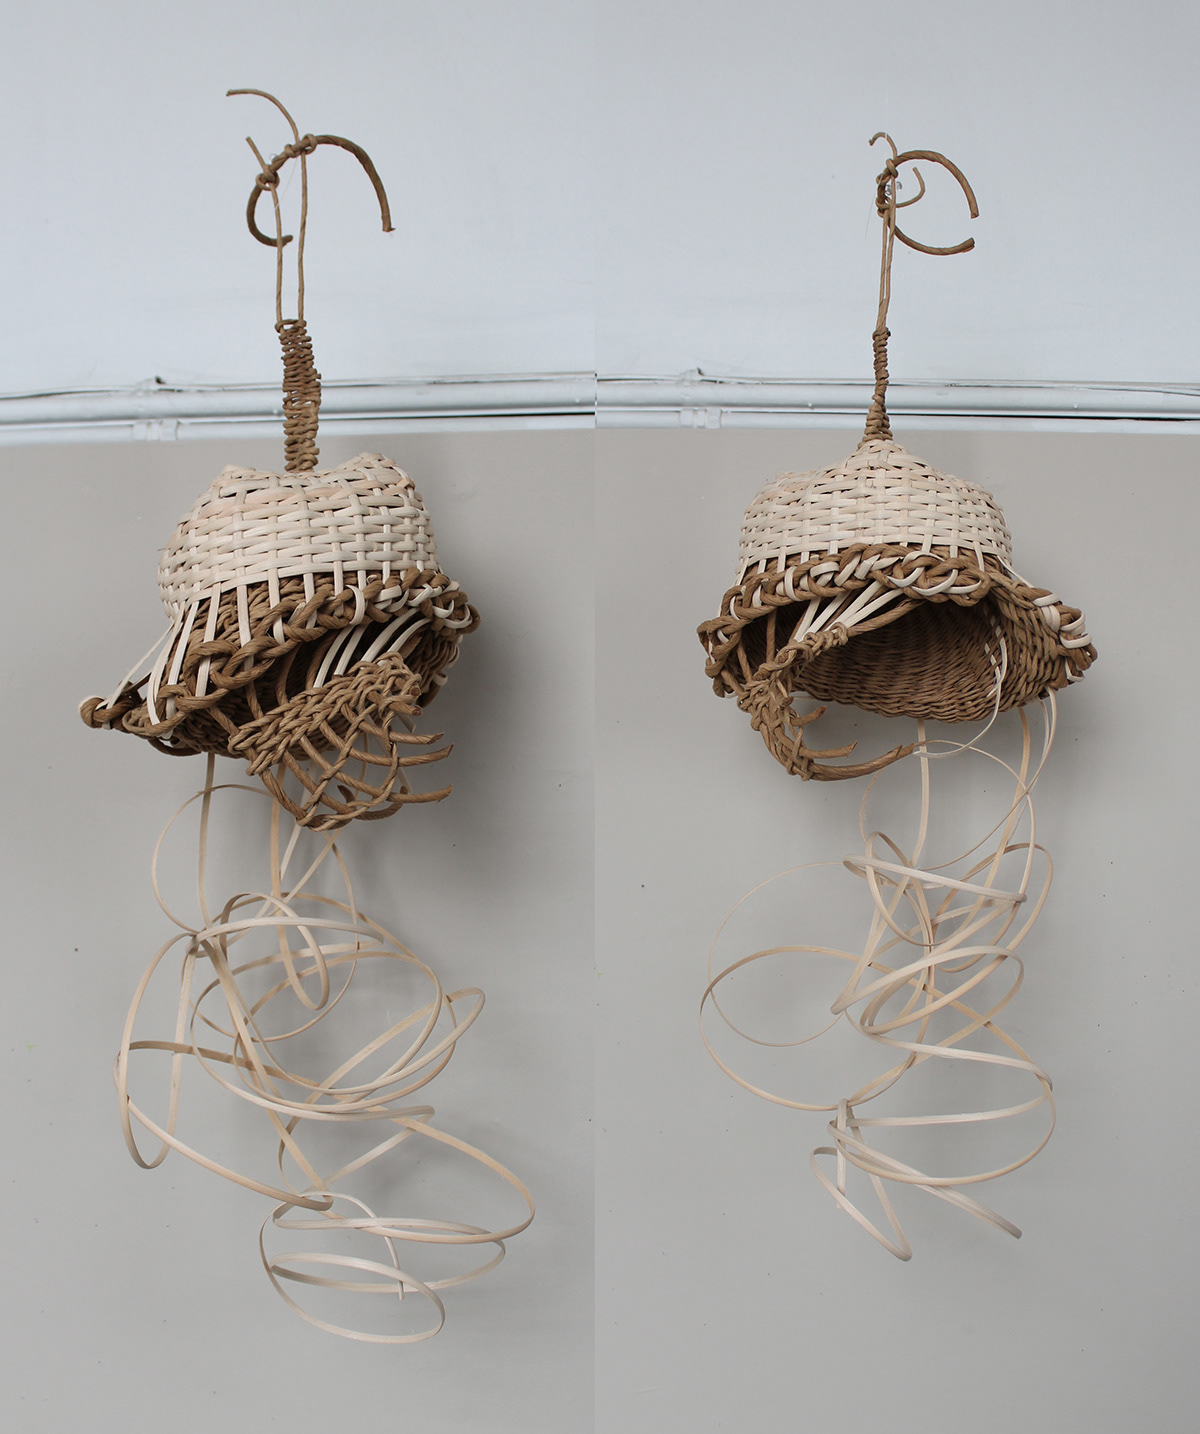 weave weaving cattail twining reed fiberrush base multibase sculpture sculpturalweaving